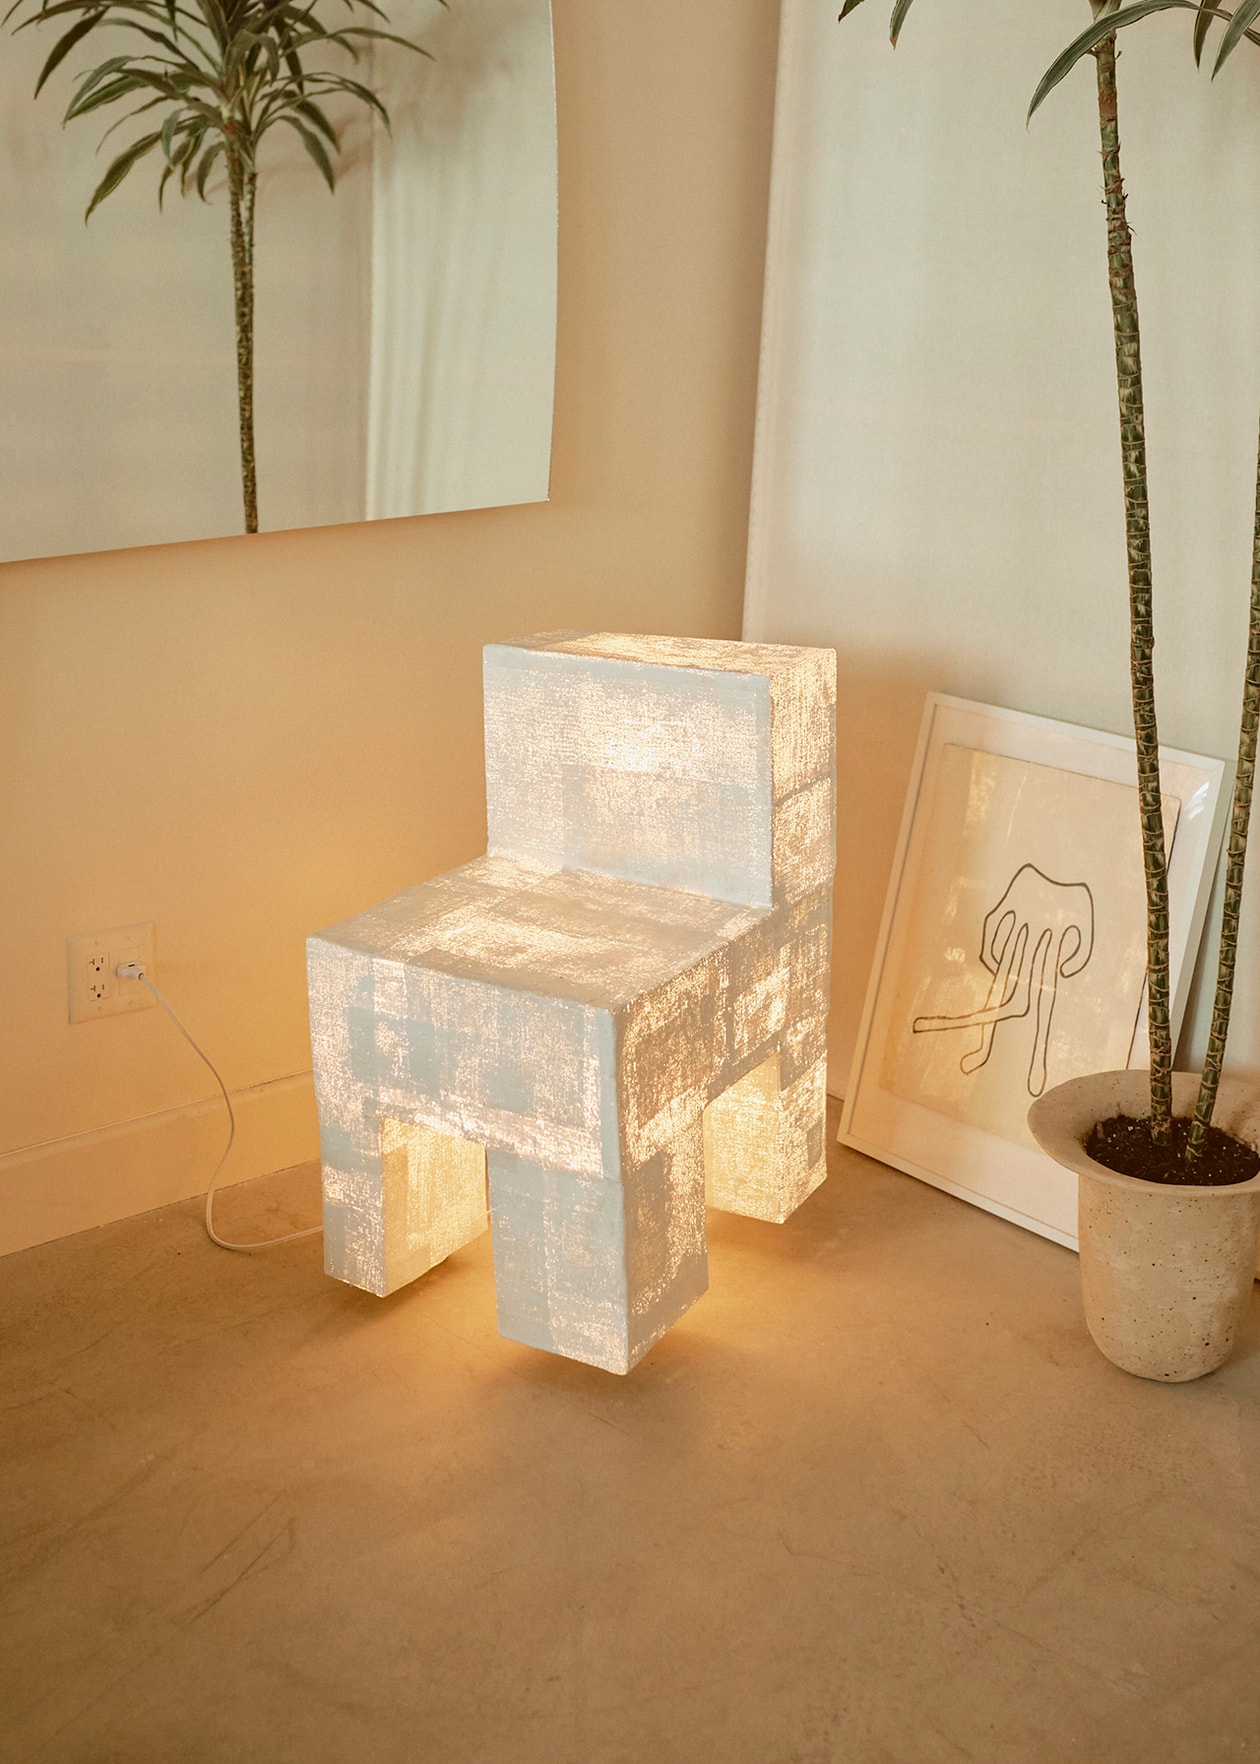 Eny Lee Parker Furniture Designer Ceramic Objects Lighting Oo Lamp New York Queens Interior Design Decor Studio Mirror Plants 